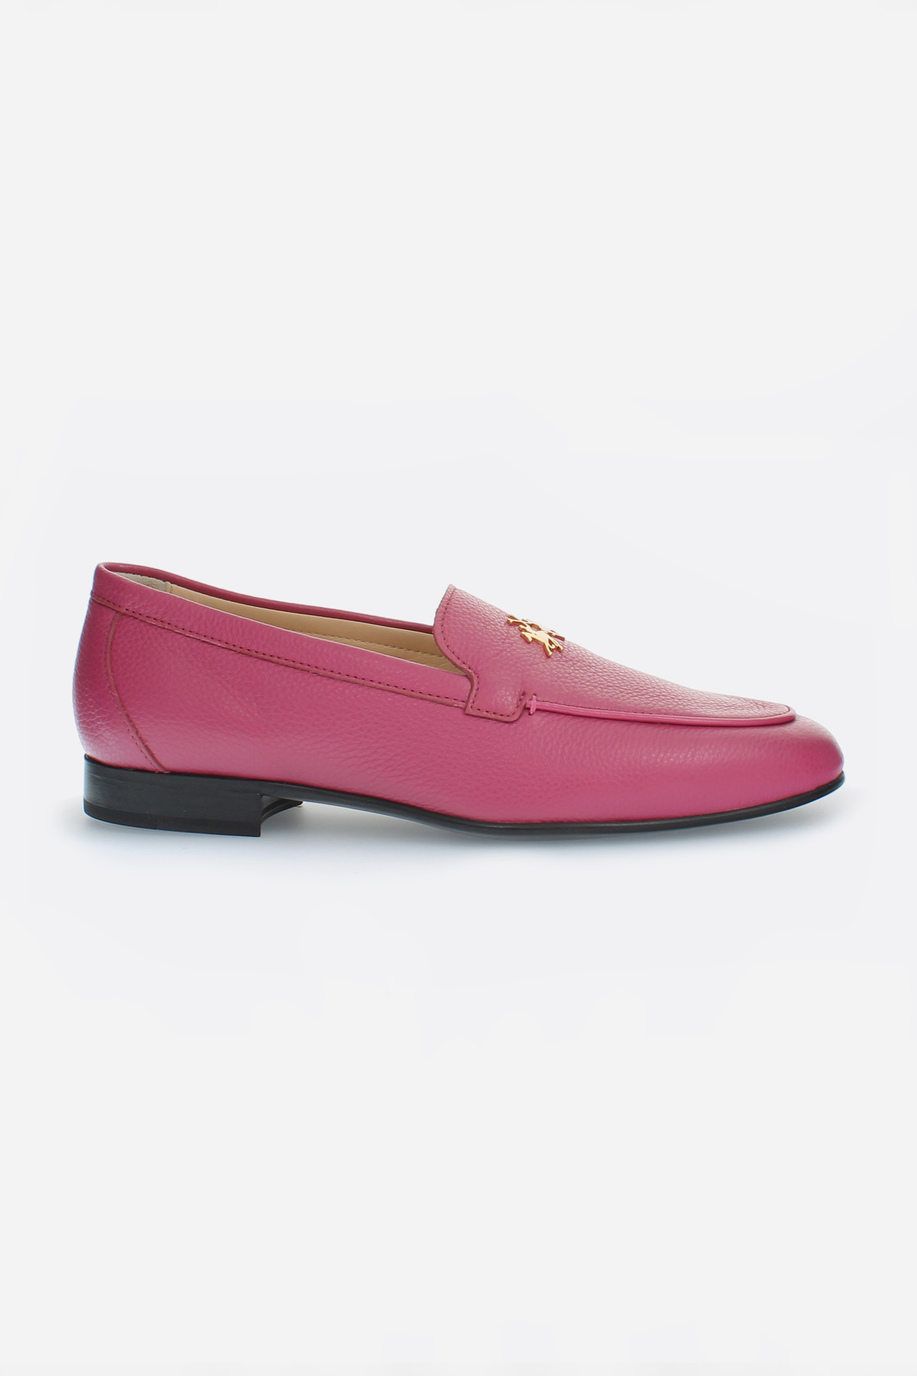 Damen-Mokassin aus Leder - Schuhe | La Martina - Official Online Shop